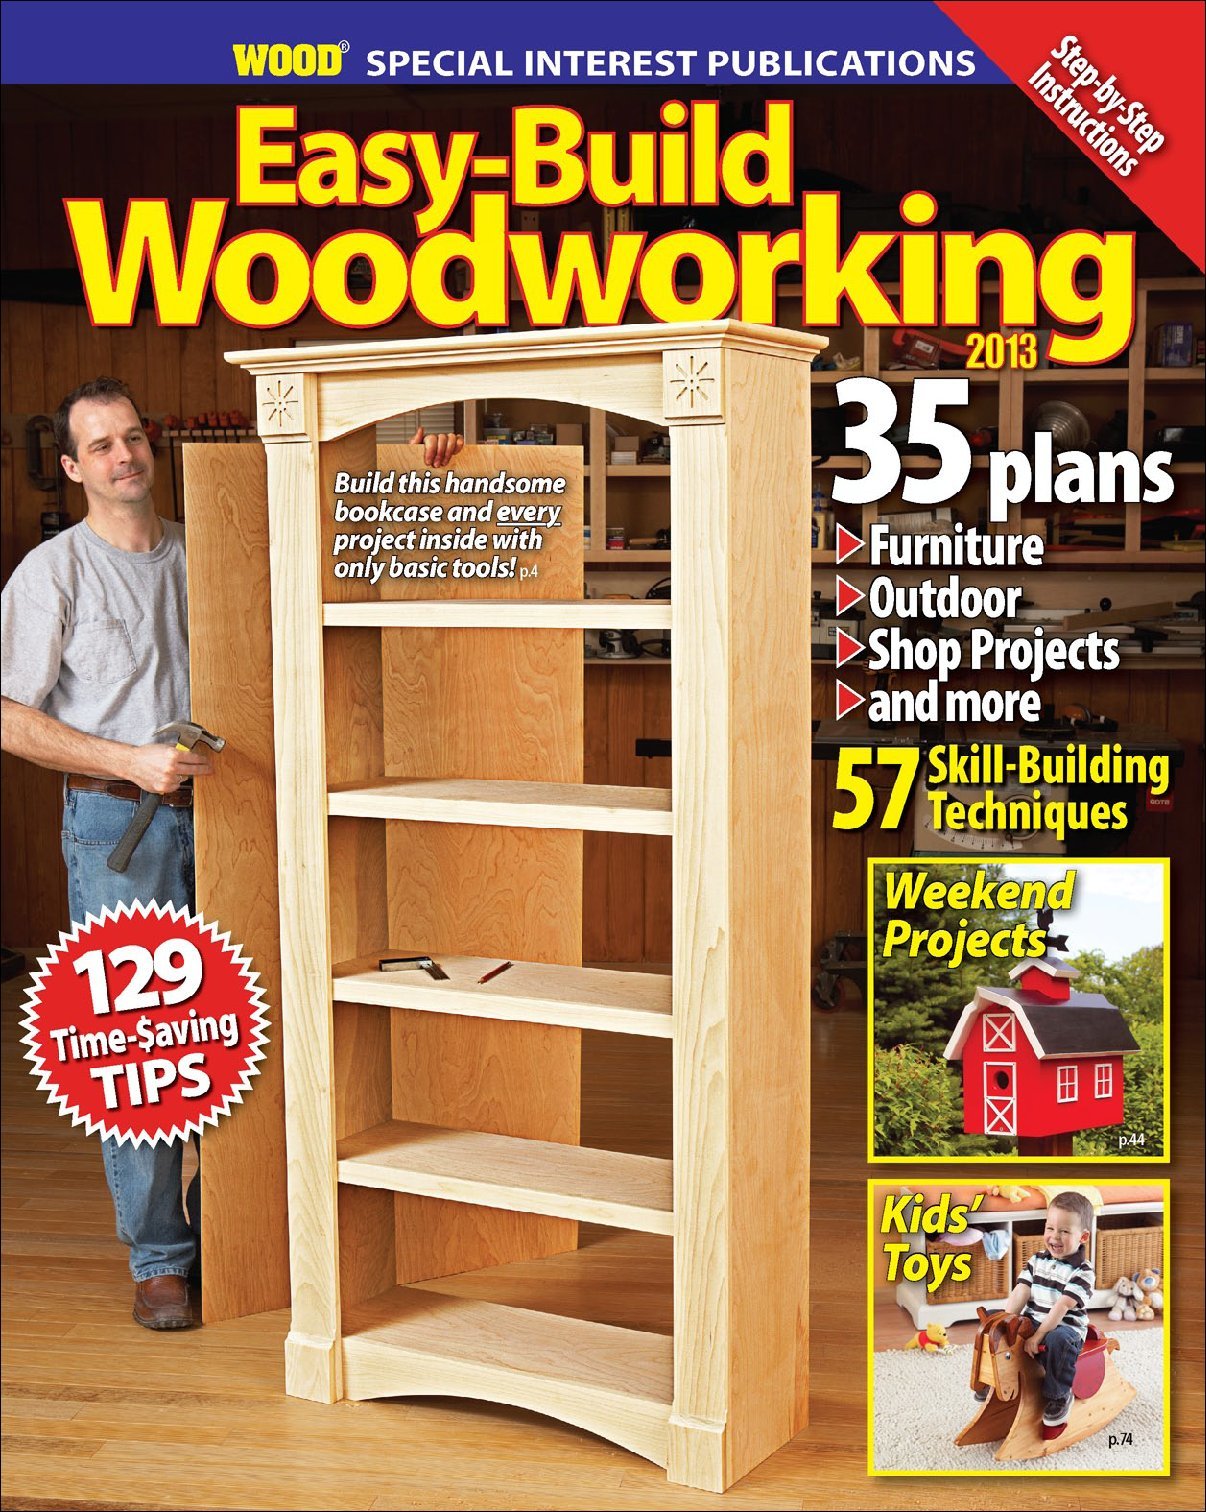 Woodworking magazine to